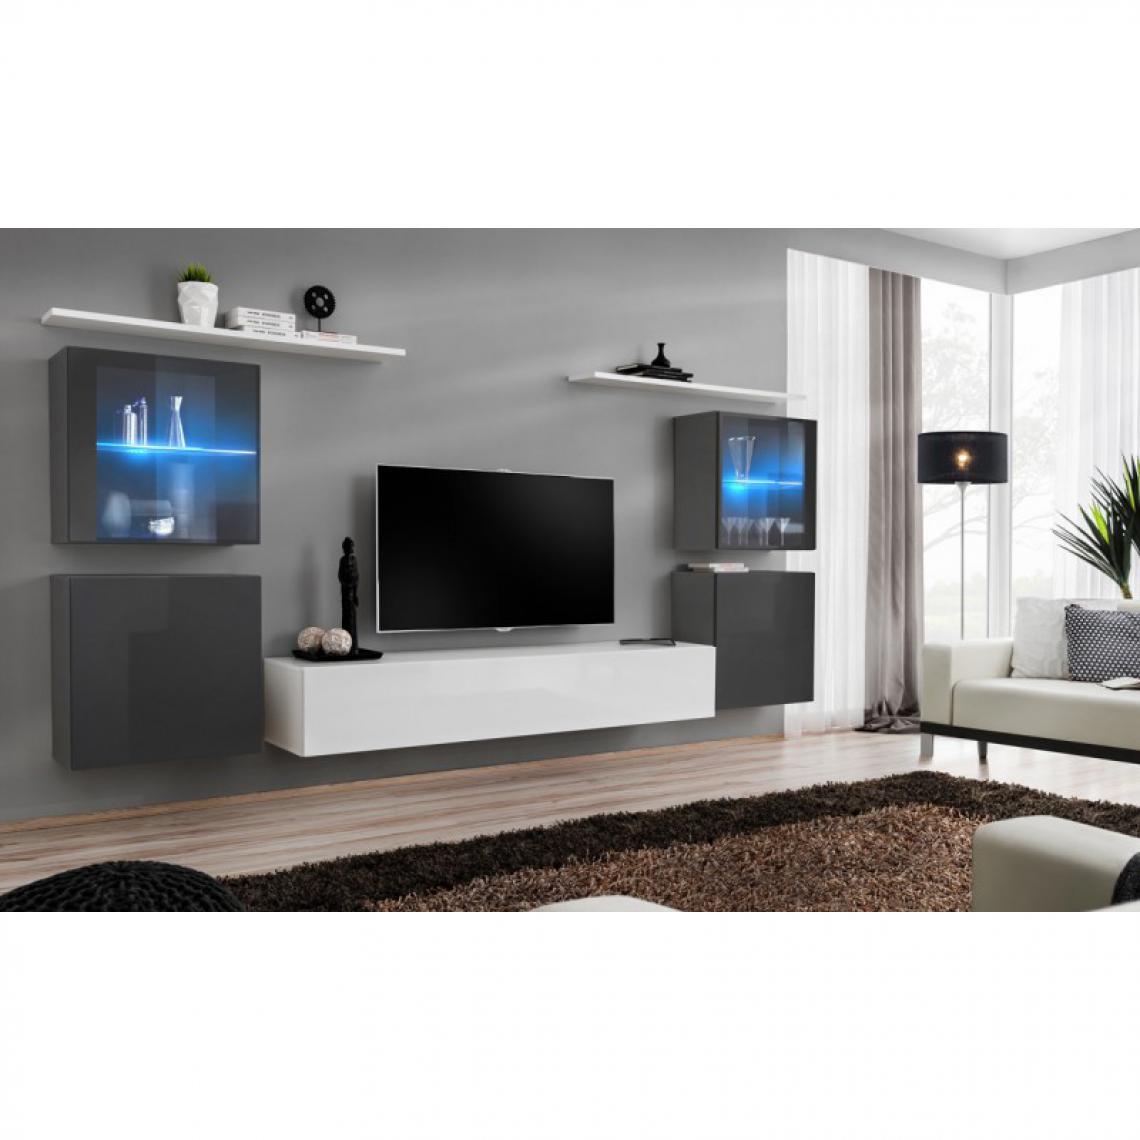 Ac-Deco - Meuble TV Mural Design Switch XIV 320cm Gris & Blanc - Meubles TV, Hi-Fi